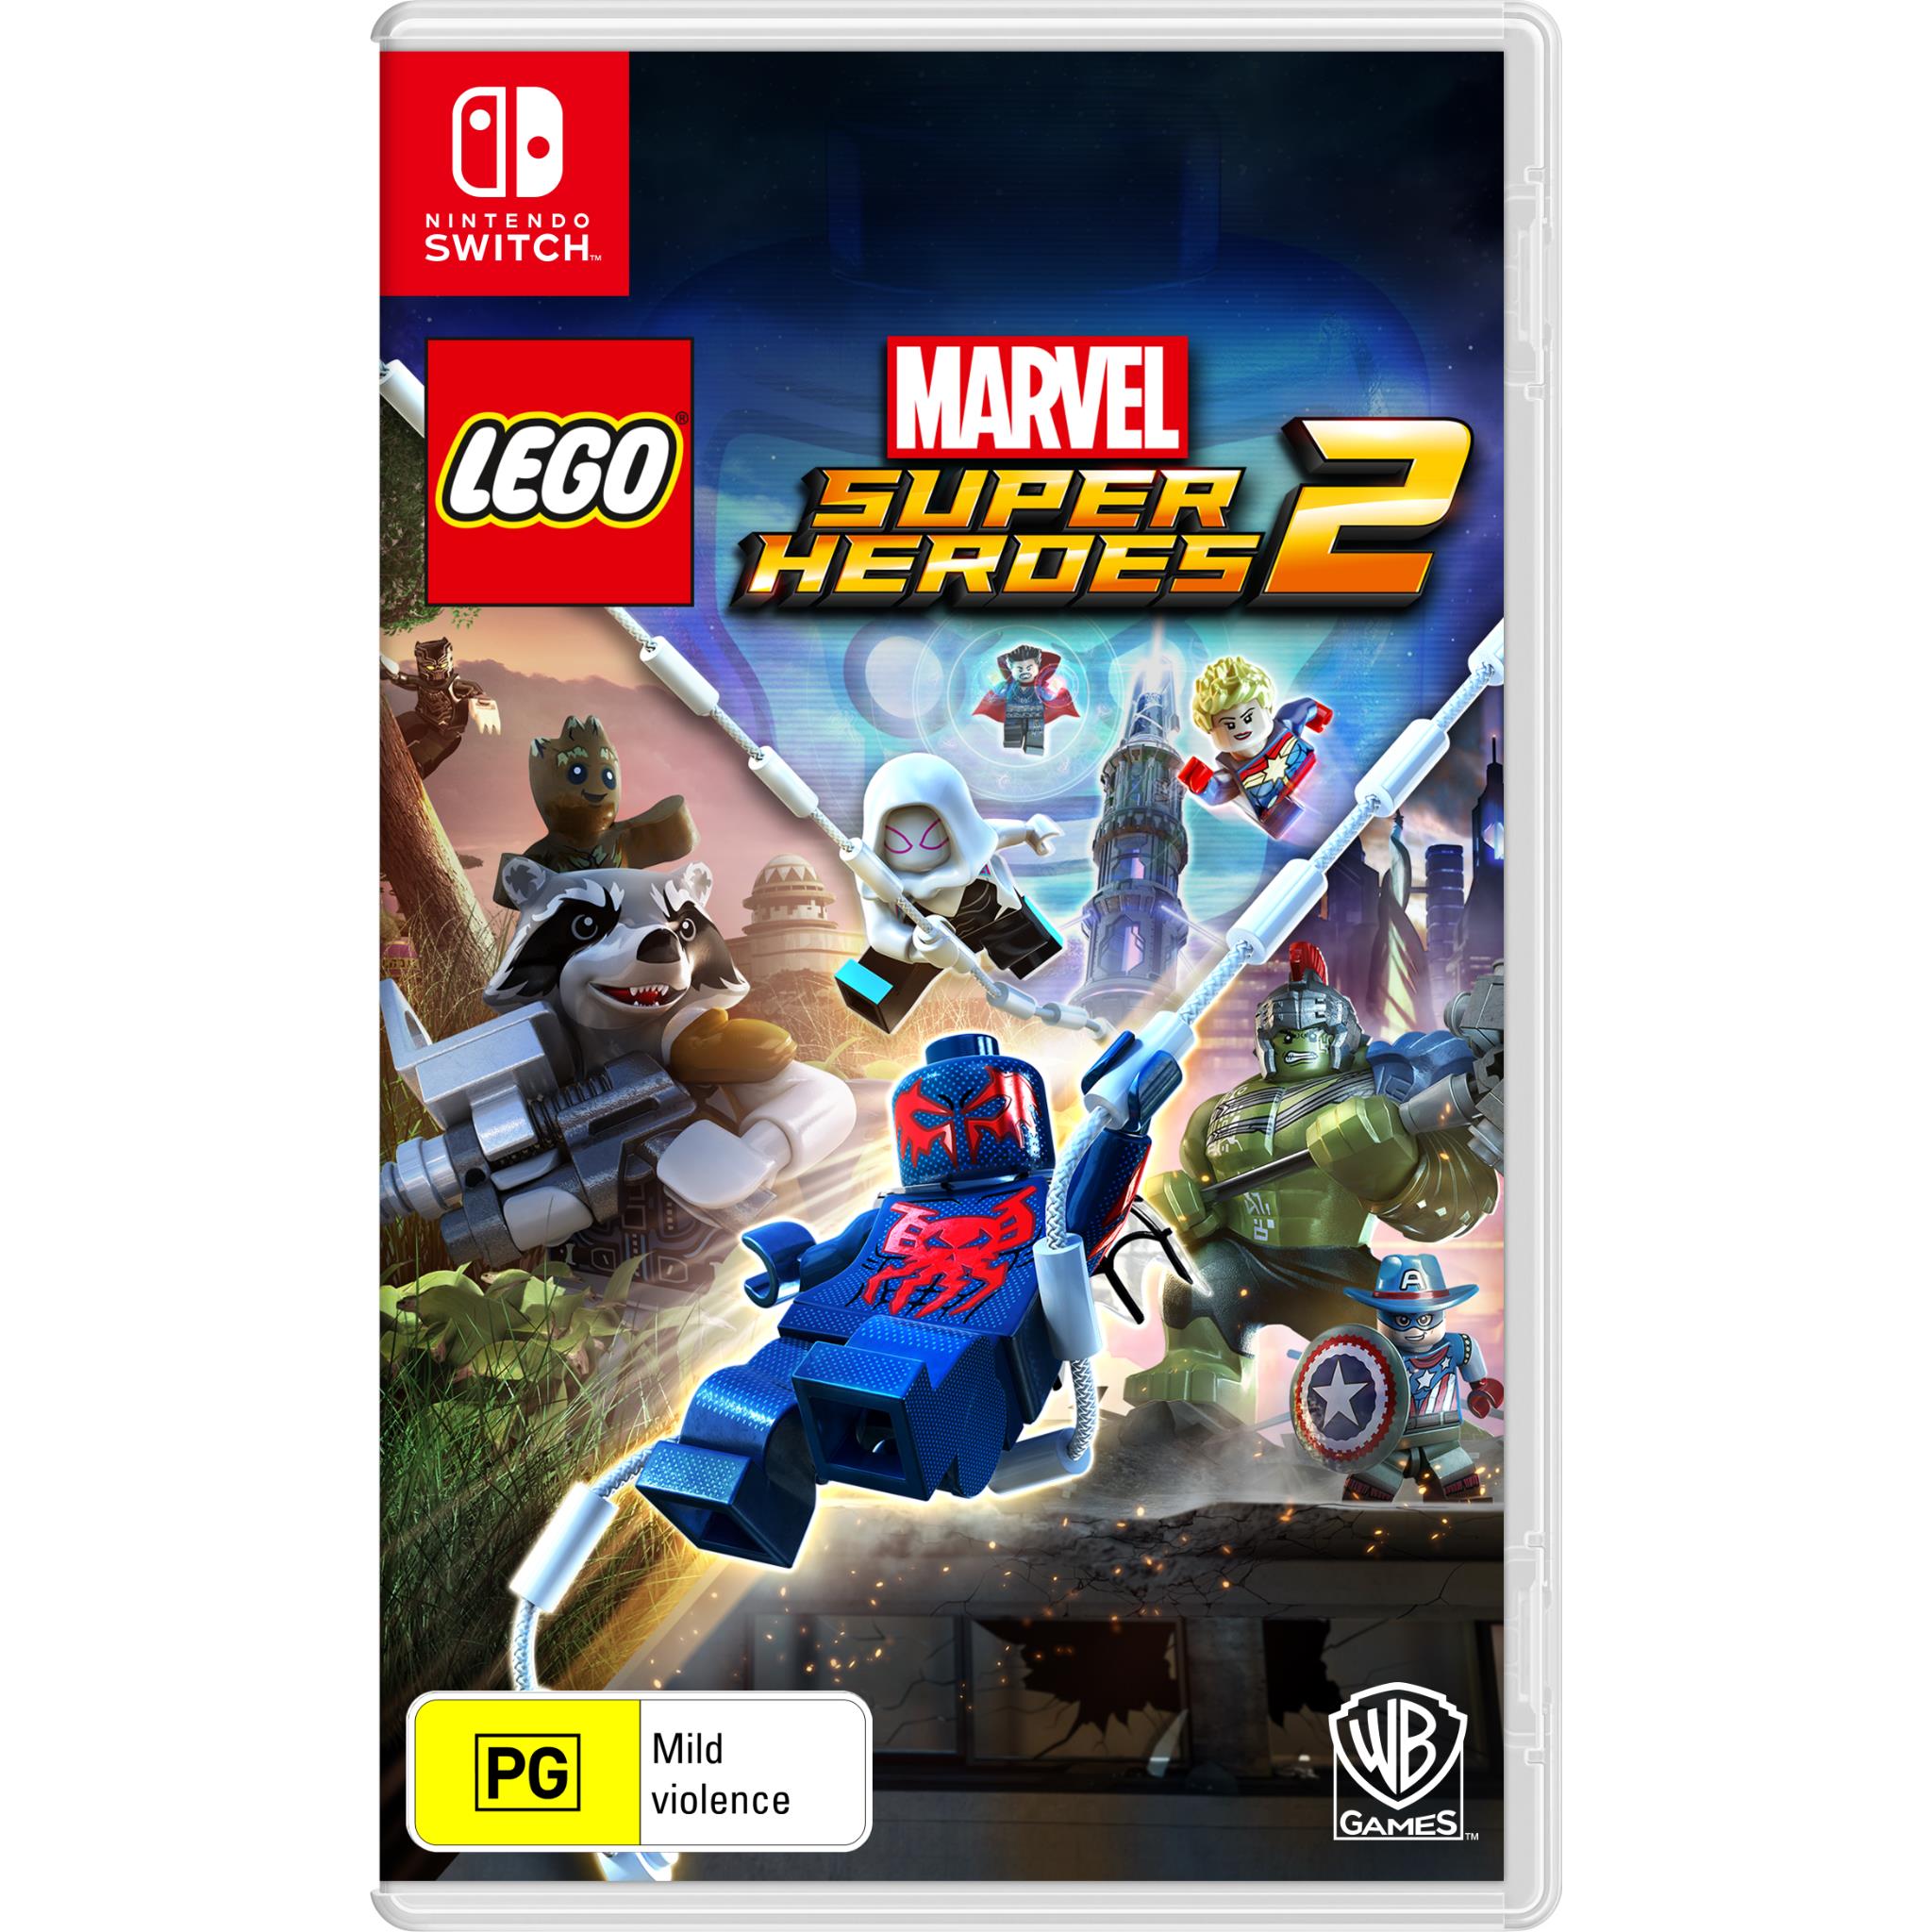 LEGO Marvel Super Heroes 2 JB Hi-Fi